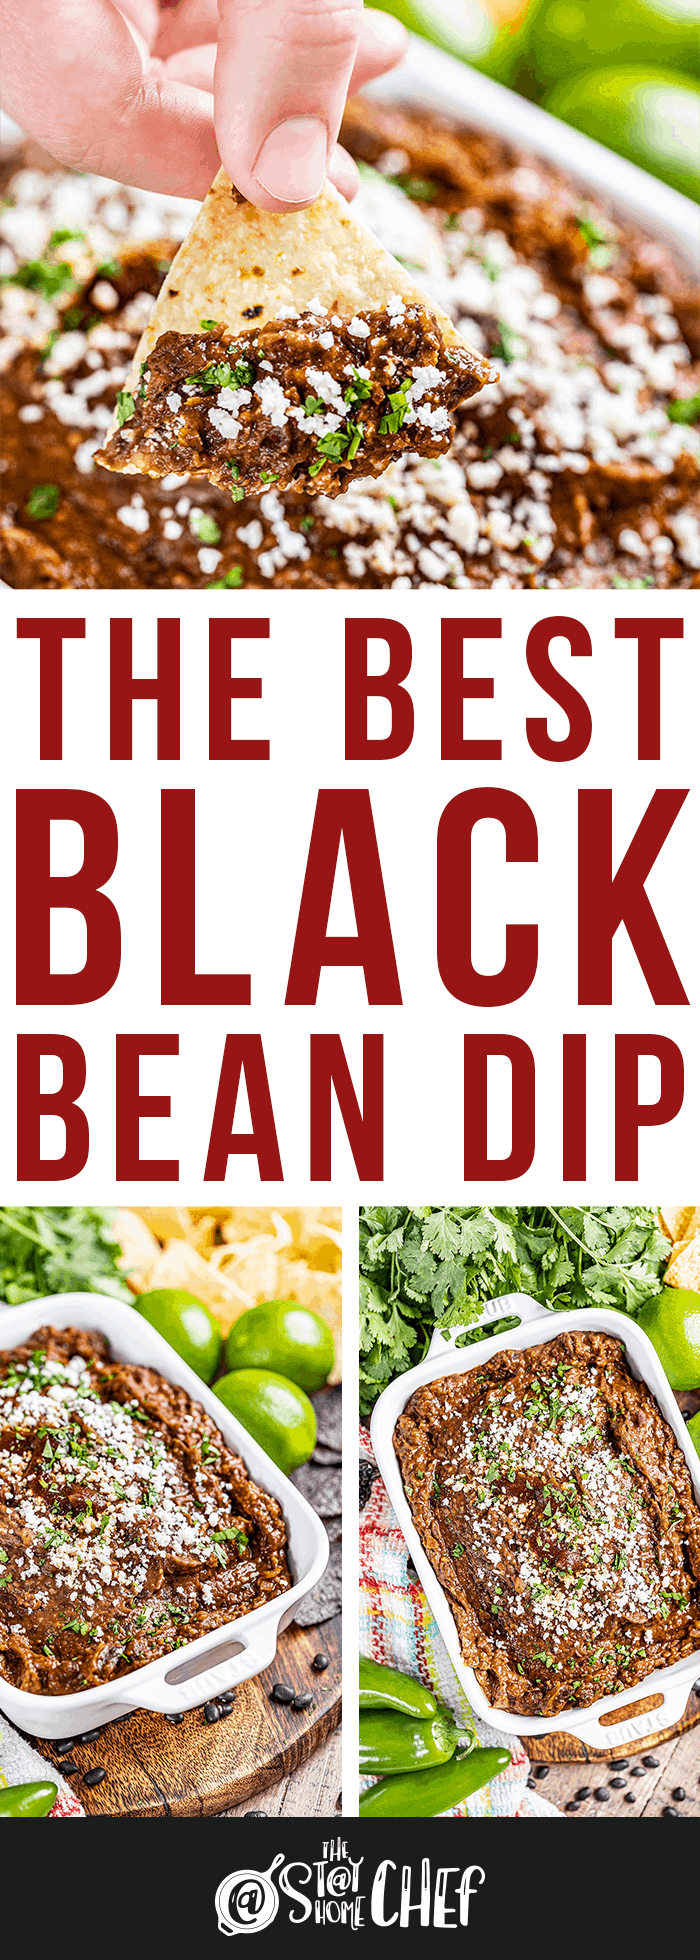 Black Bean Dip